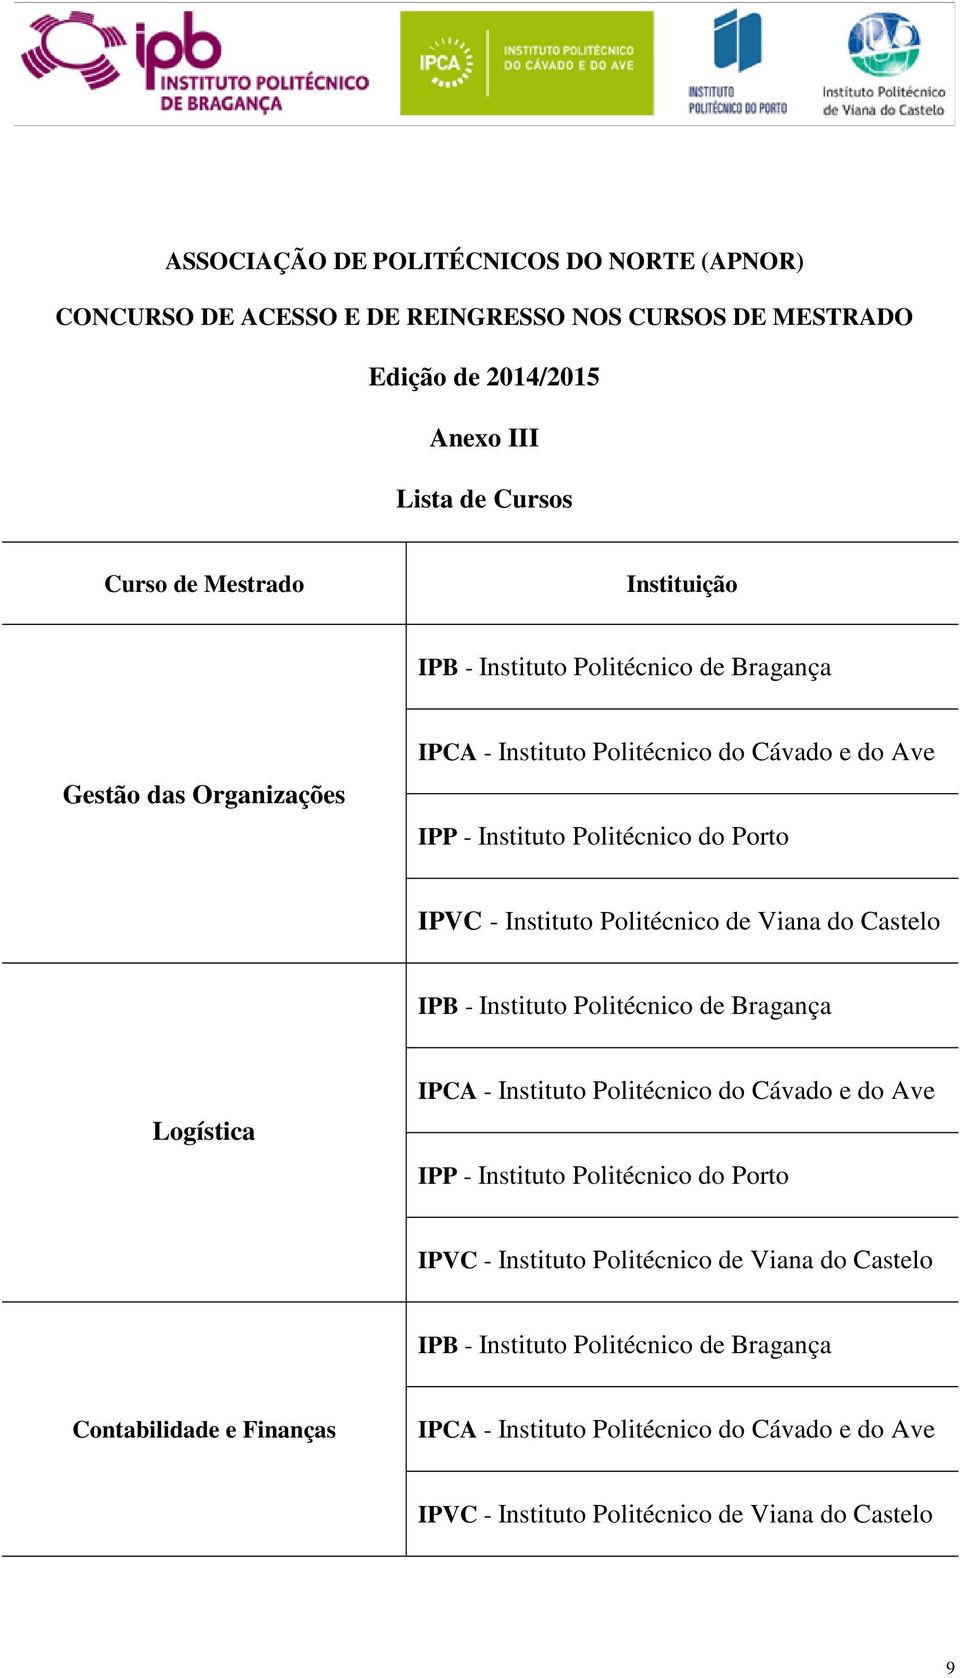 Logística IPCA - Instituto Politécnico  Contabilidade e Finanças IPCA - Instituto Politécnico do Cávado e do Ave IPVC - Instituto Politécnico de Viana